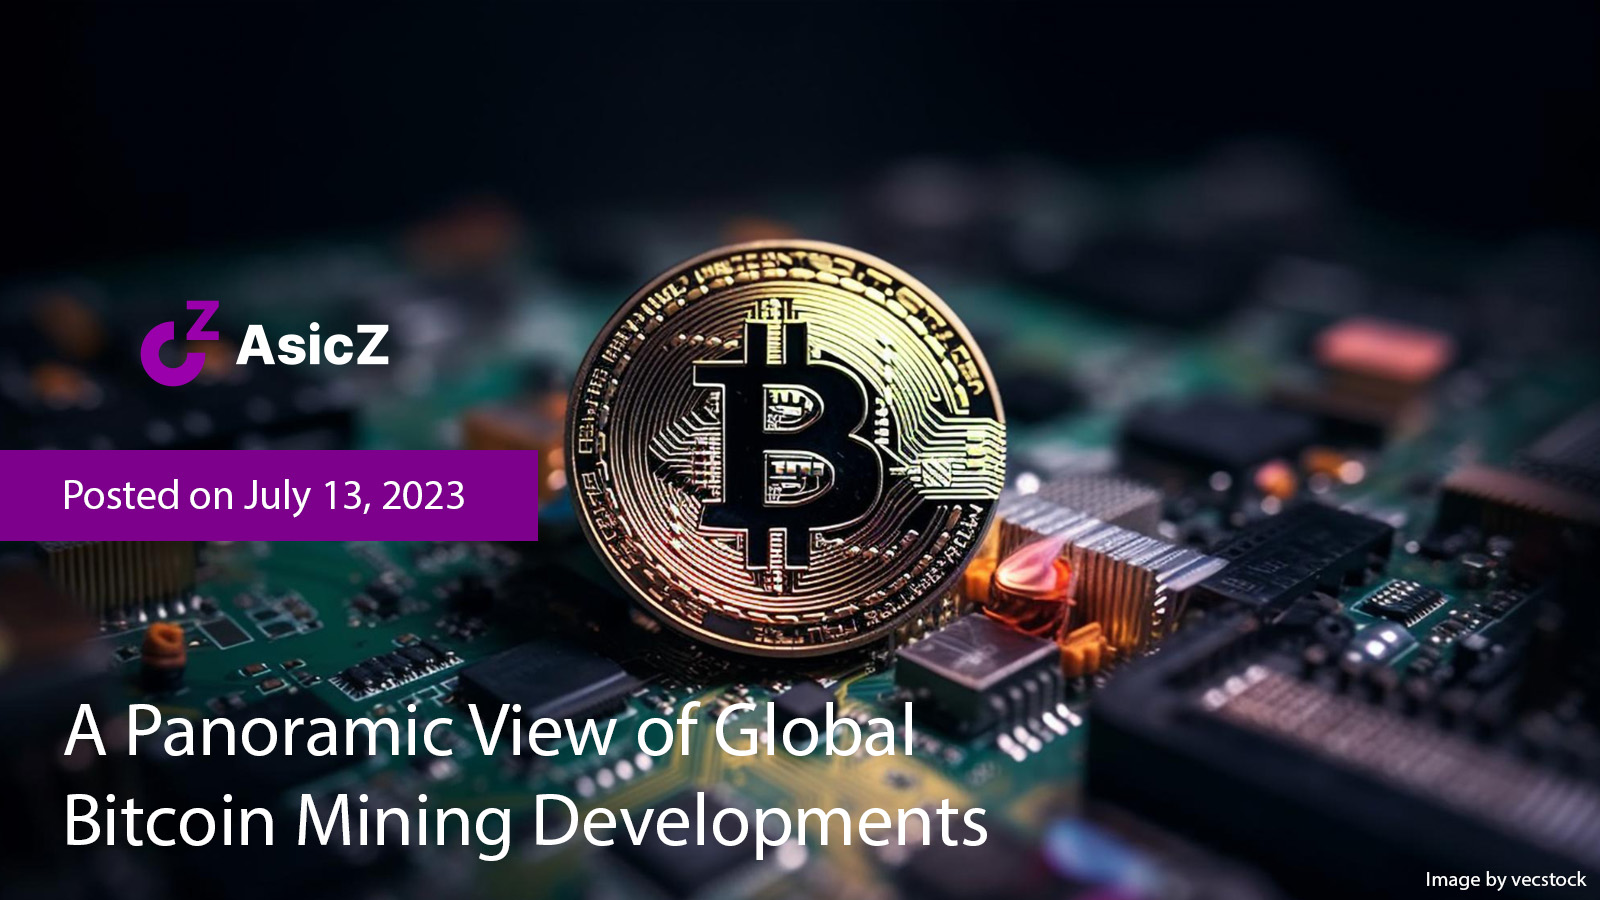 Mining Monday: A Panoramic View of Global Bitcoin Mining Developments